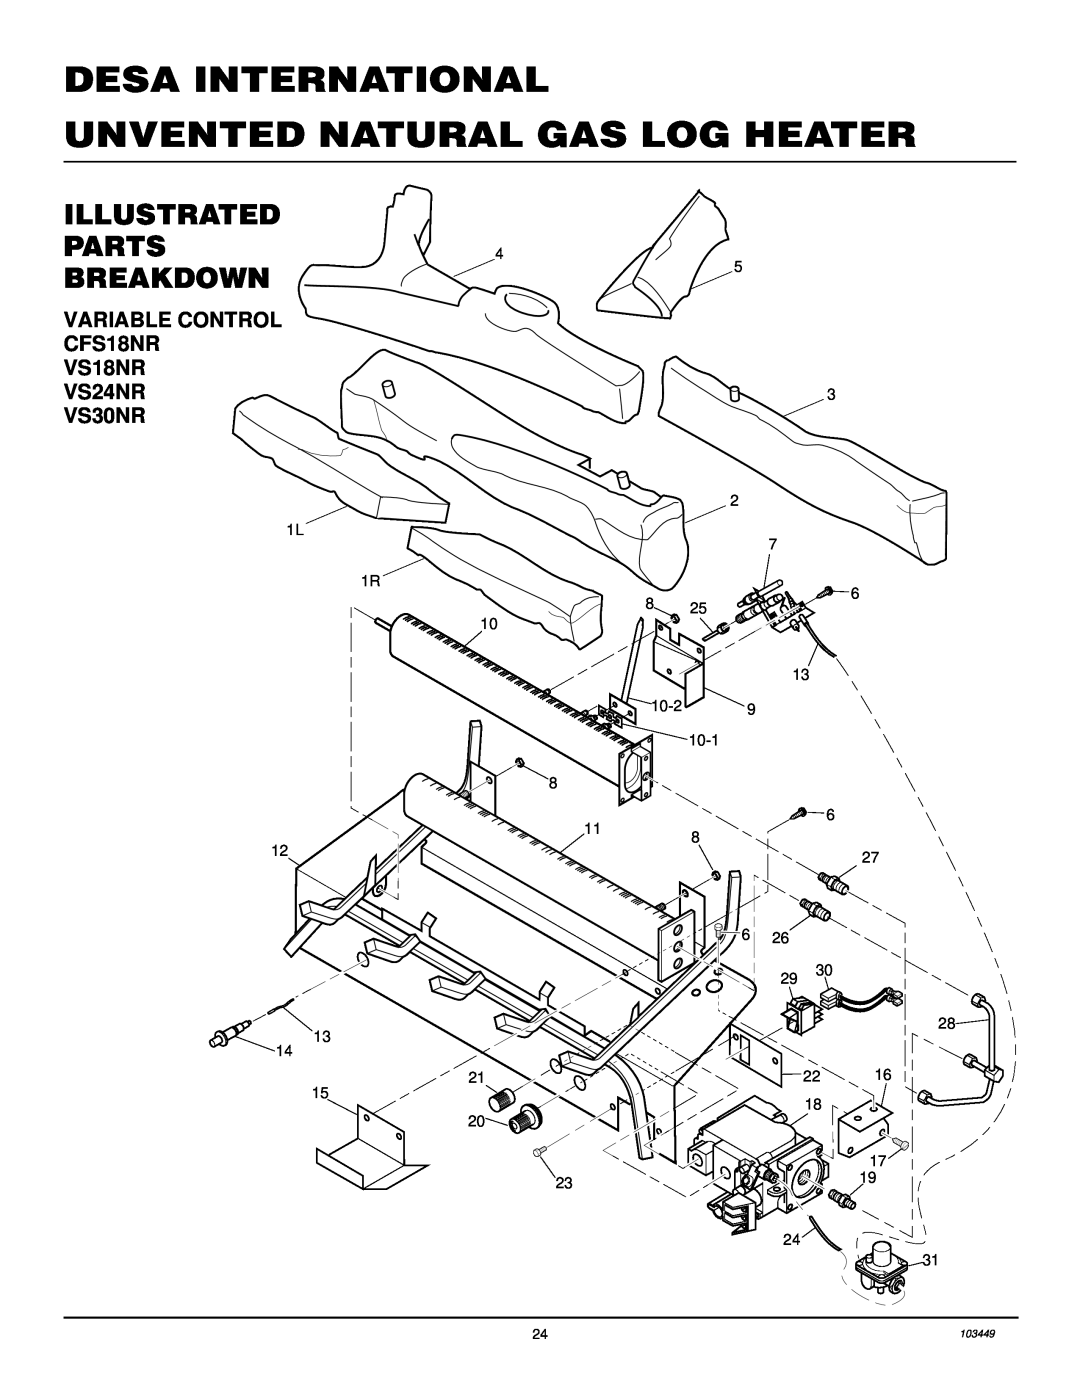 Desa CFS18NR, VS24NR VS30NR, VS18NR Illustrated, Parts, Breakdown, Desa International, Unvented Natural Gas Log Heater 